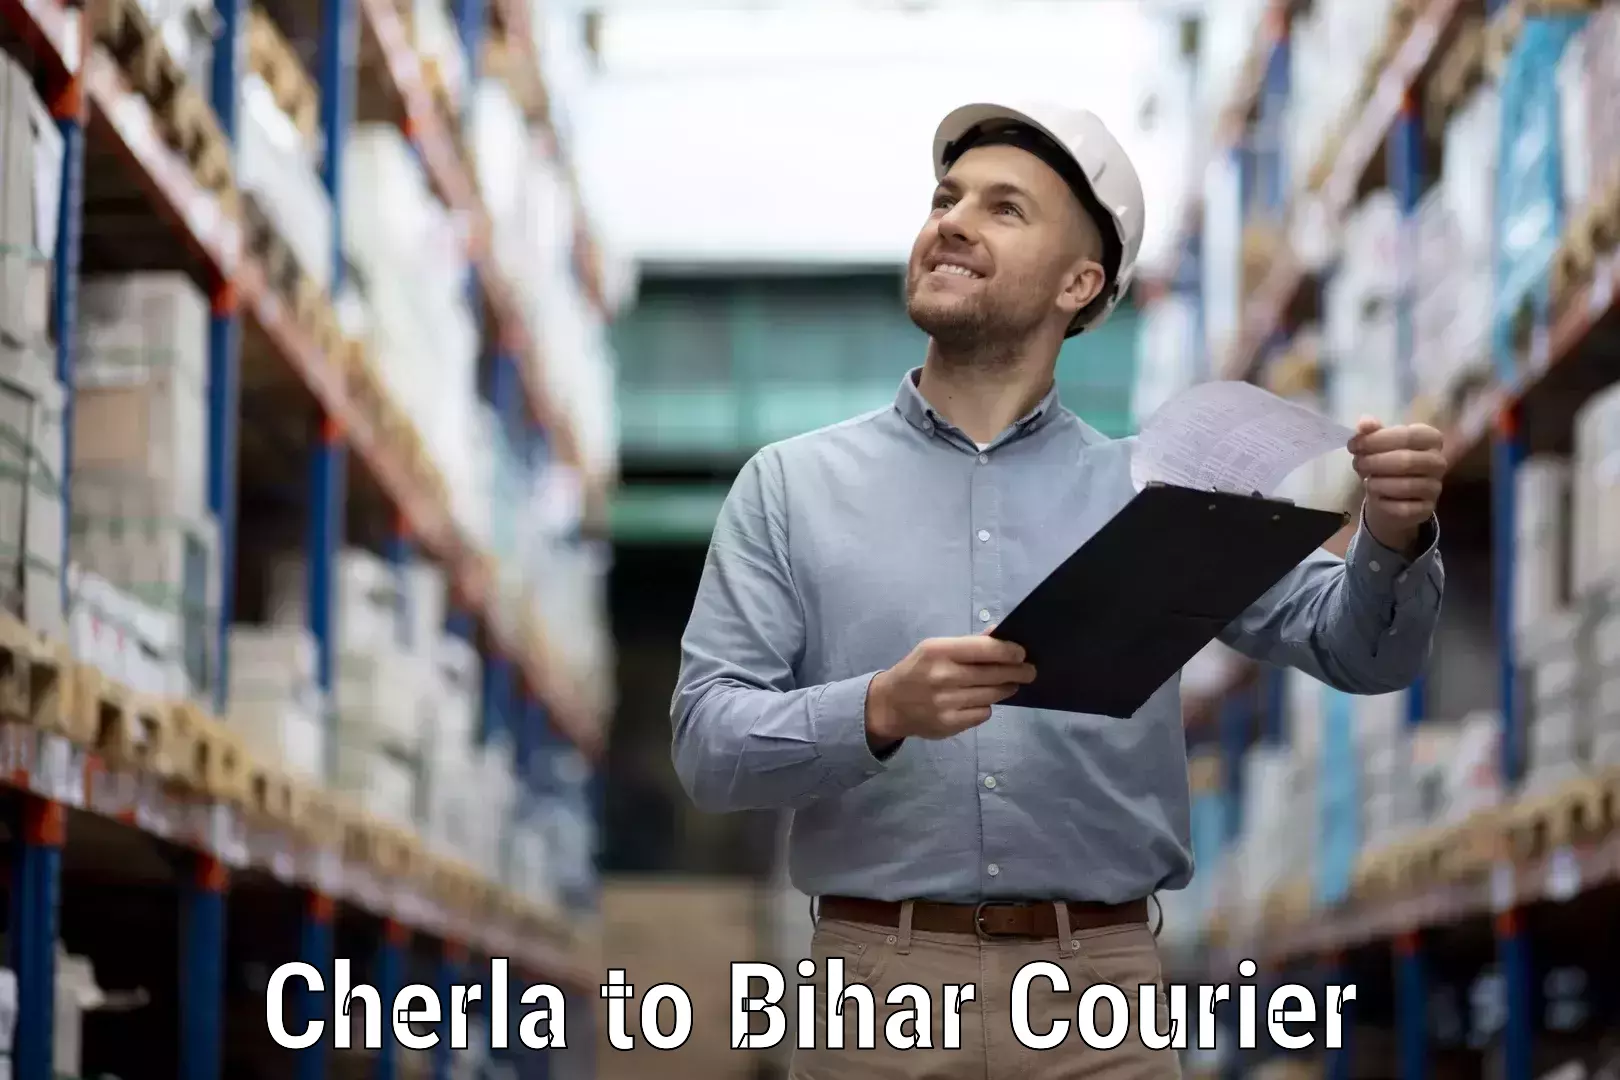 Customer-focused courier Cherla to Mahnar Bazar